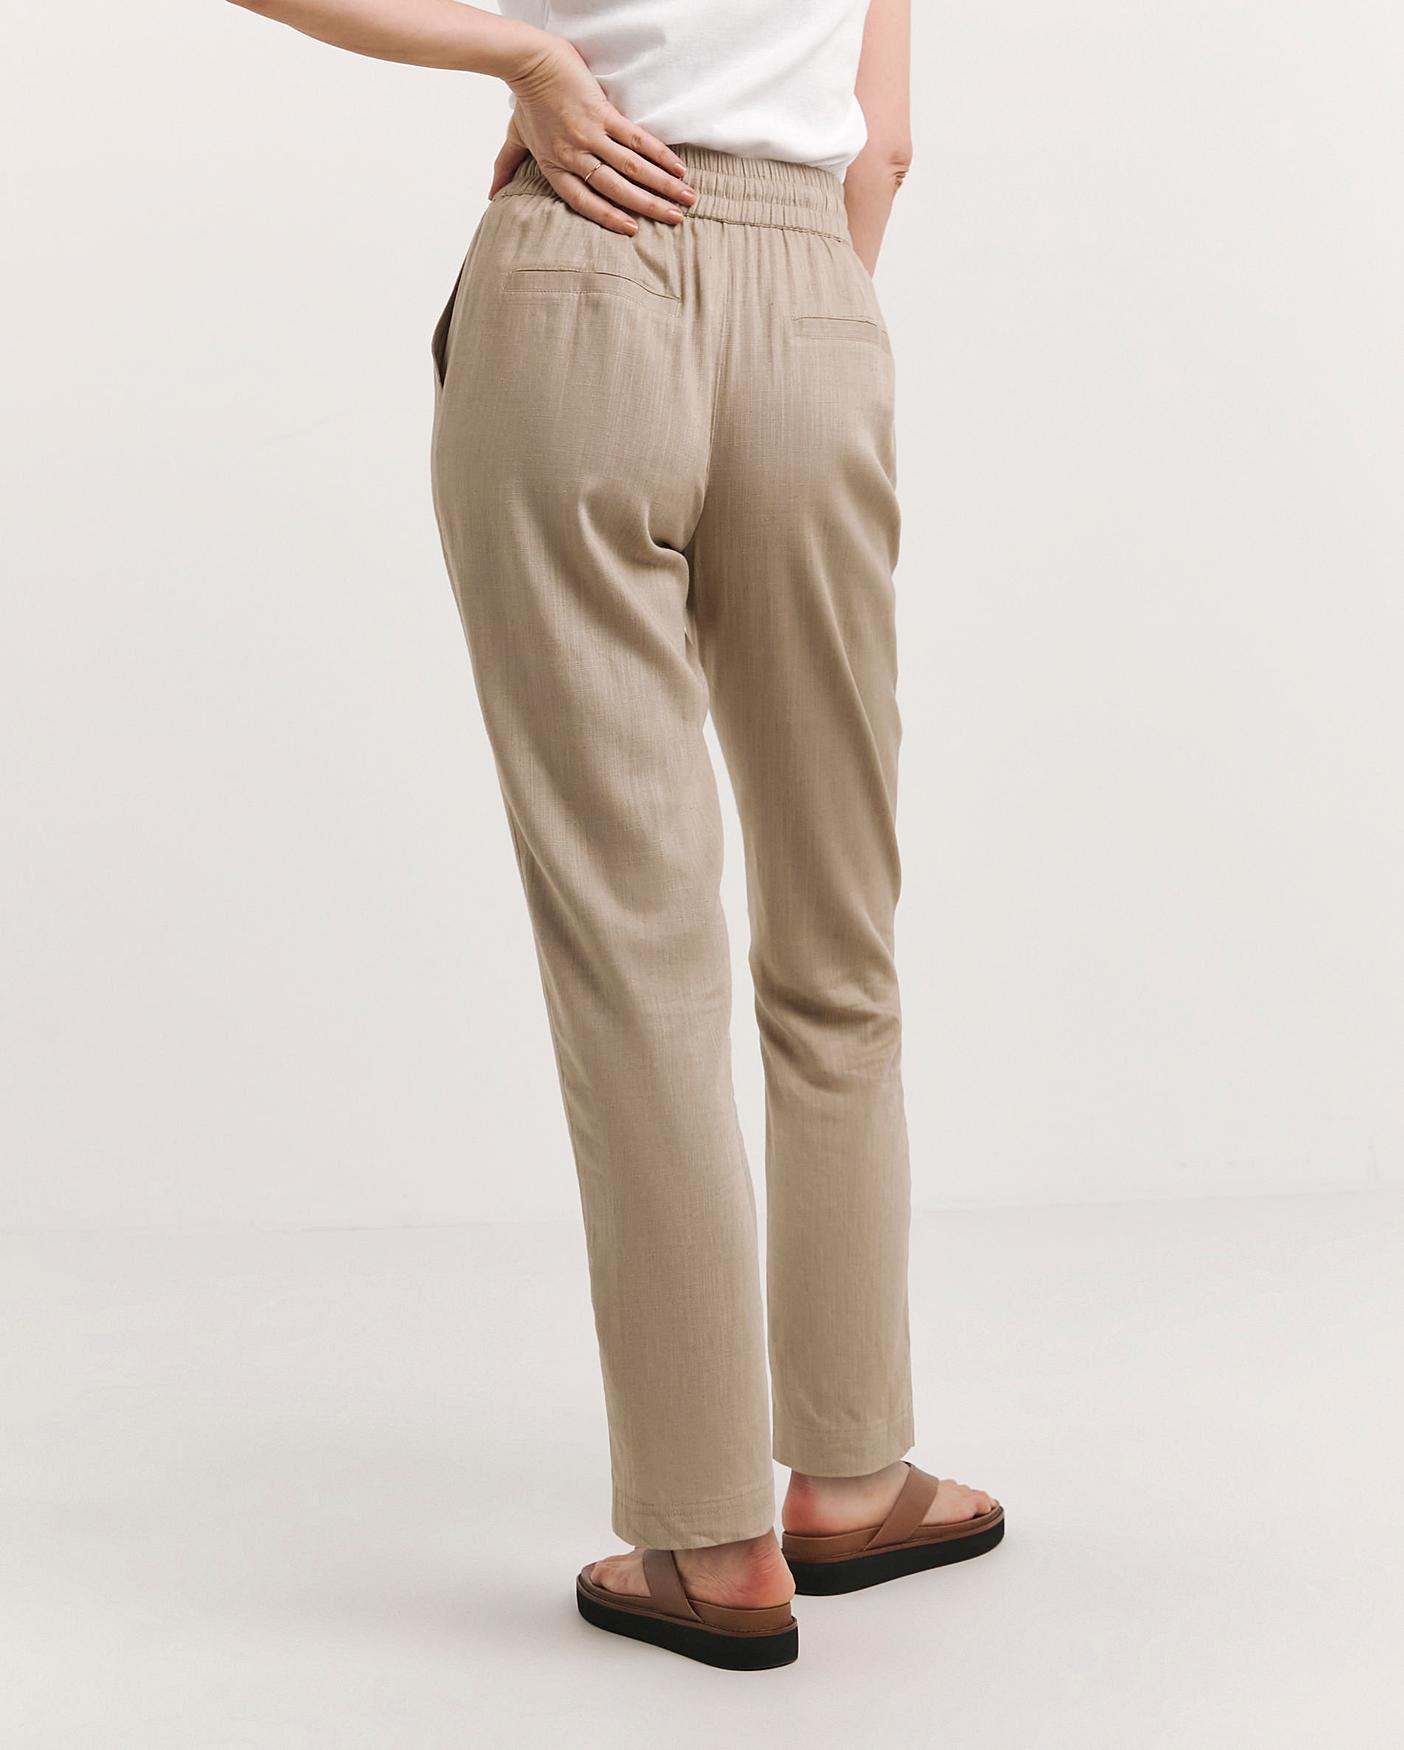 Womens High Waist Cotton Linen Trousers Ladies Casual Baggy Wide Leg Bottom  Pant | eBay